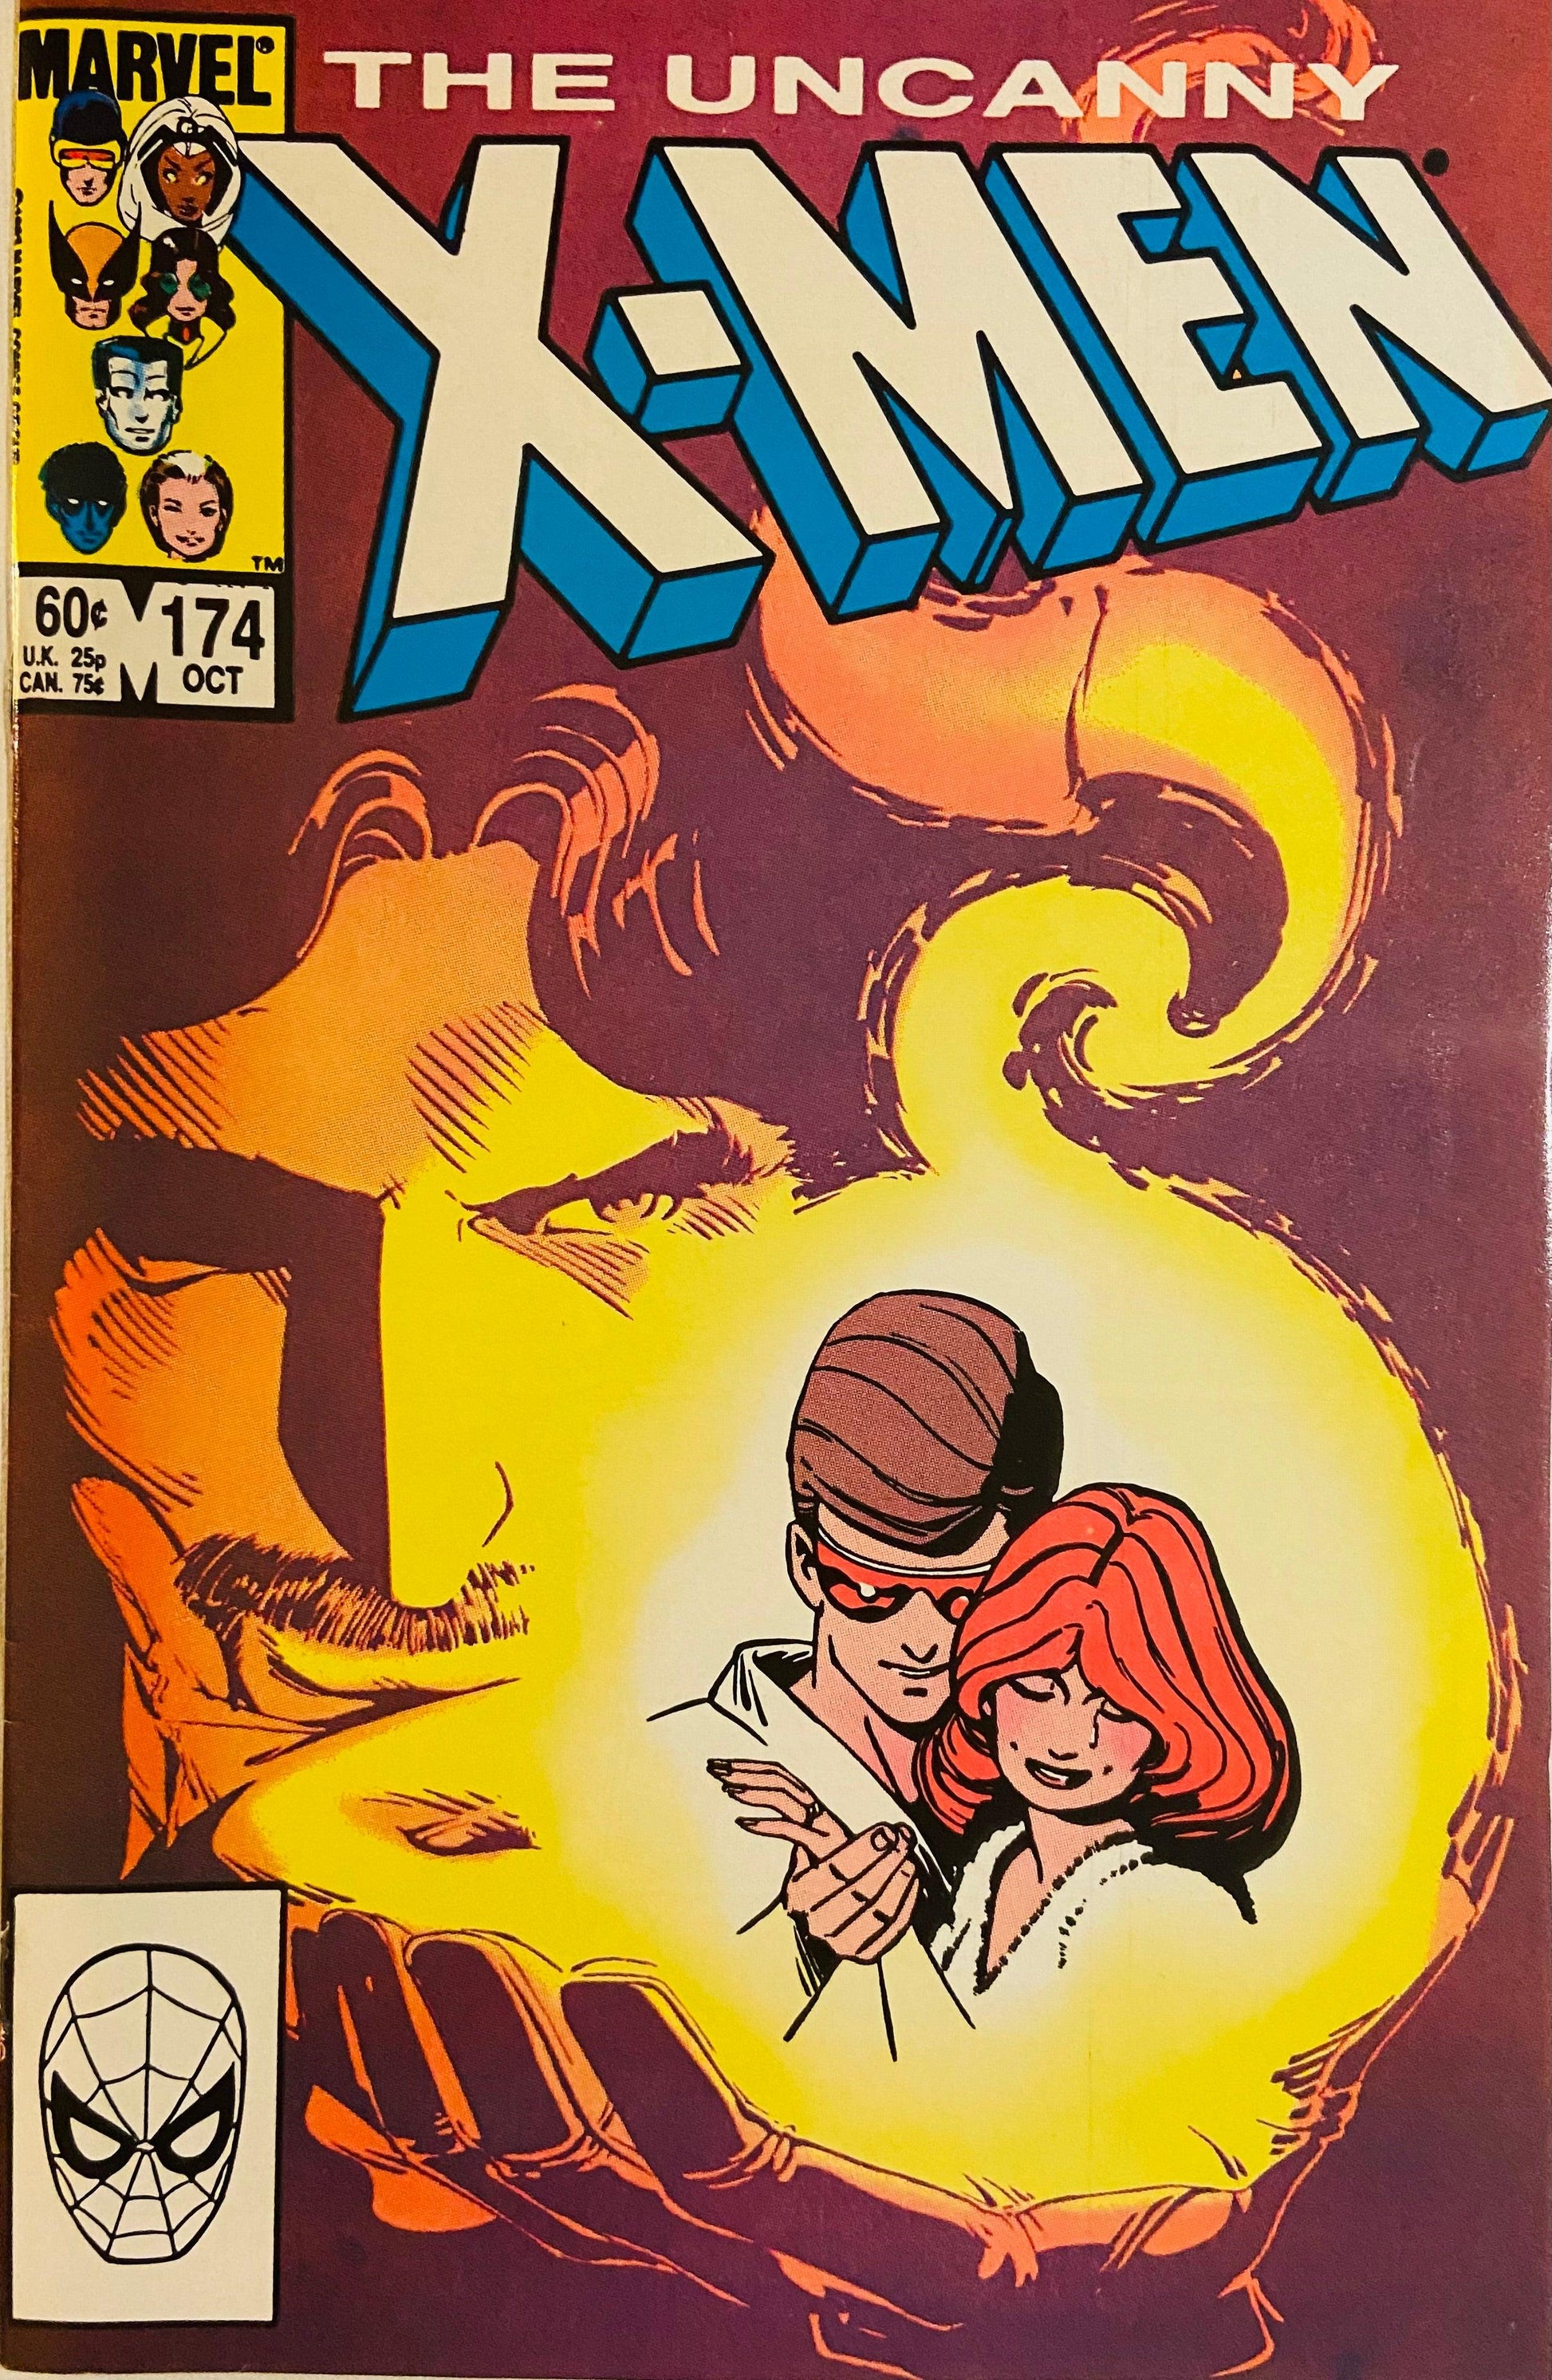 Uncanny X-men #174 - HolyGrail Comix